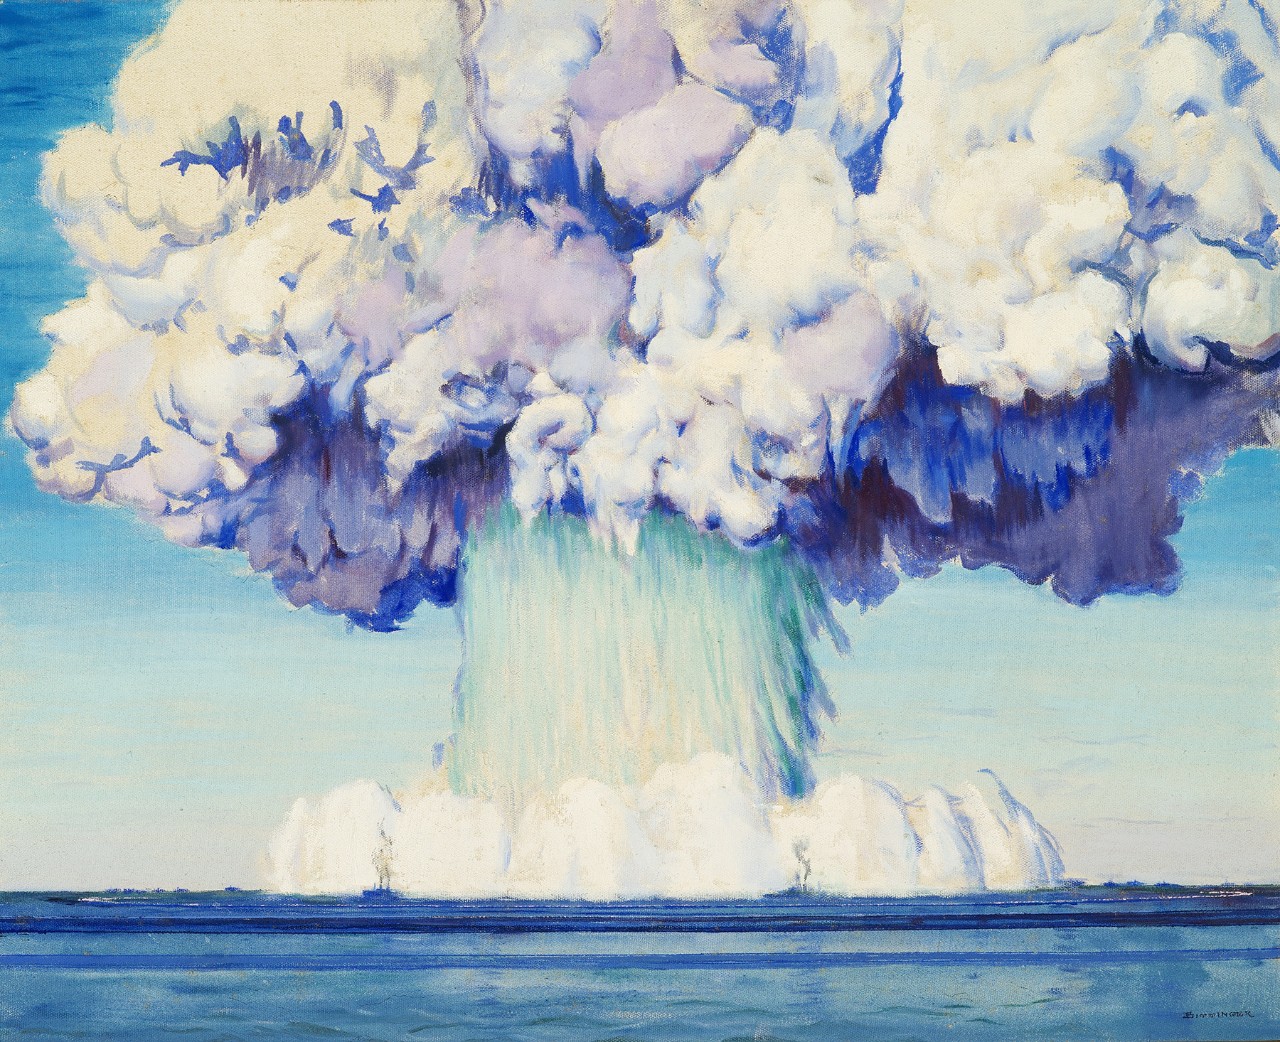 The atom bomb mushroom cloud at its peak